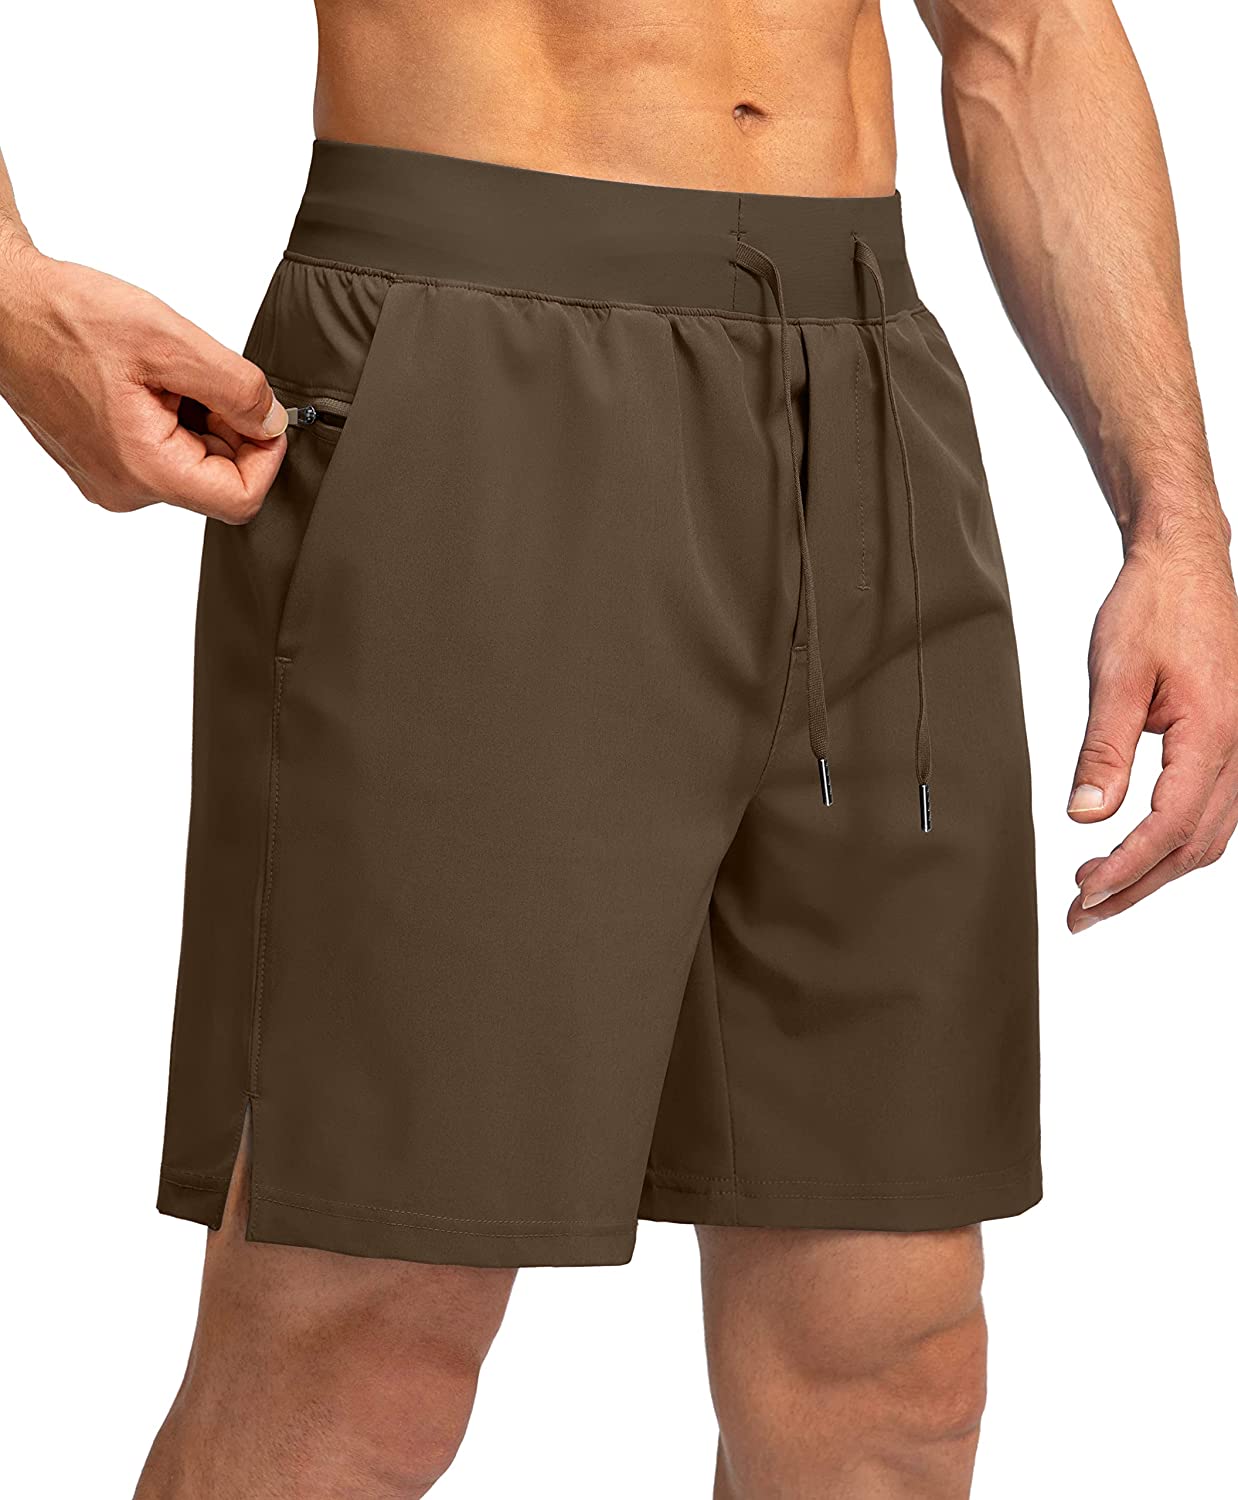 Men's Running Shorts with Zipper Pockets 7 Inch Lightweight Quick Dry Gym  Workou